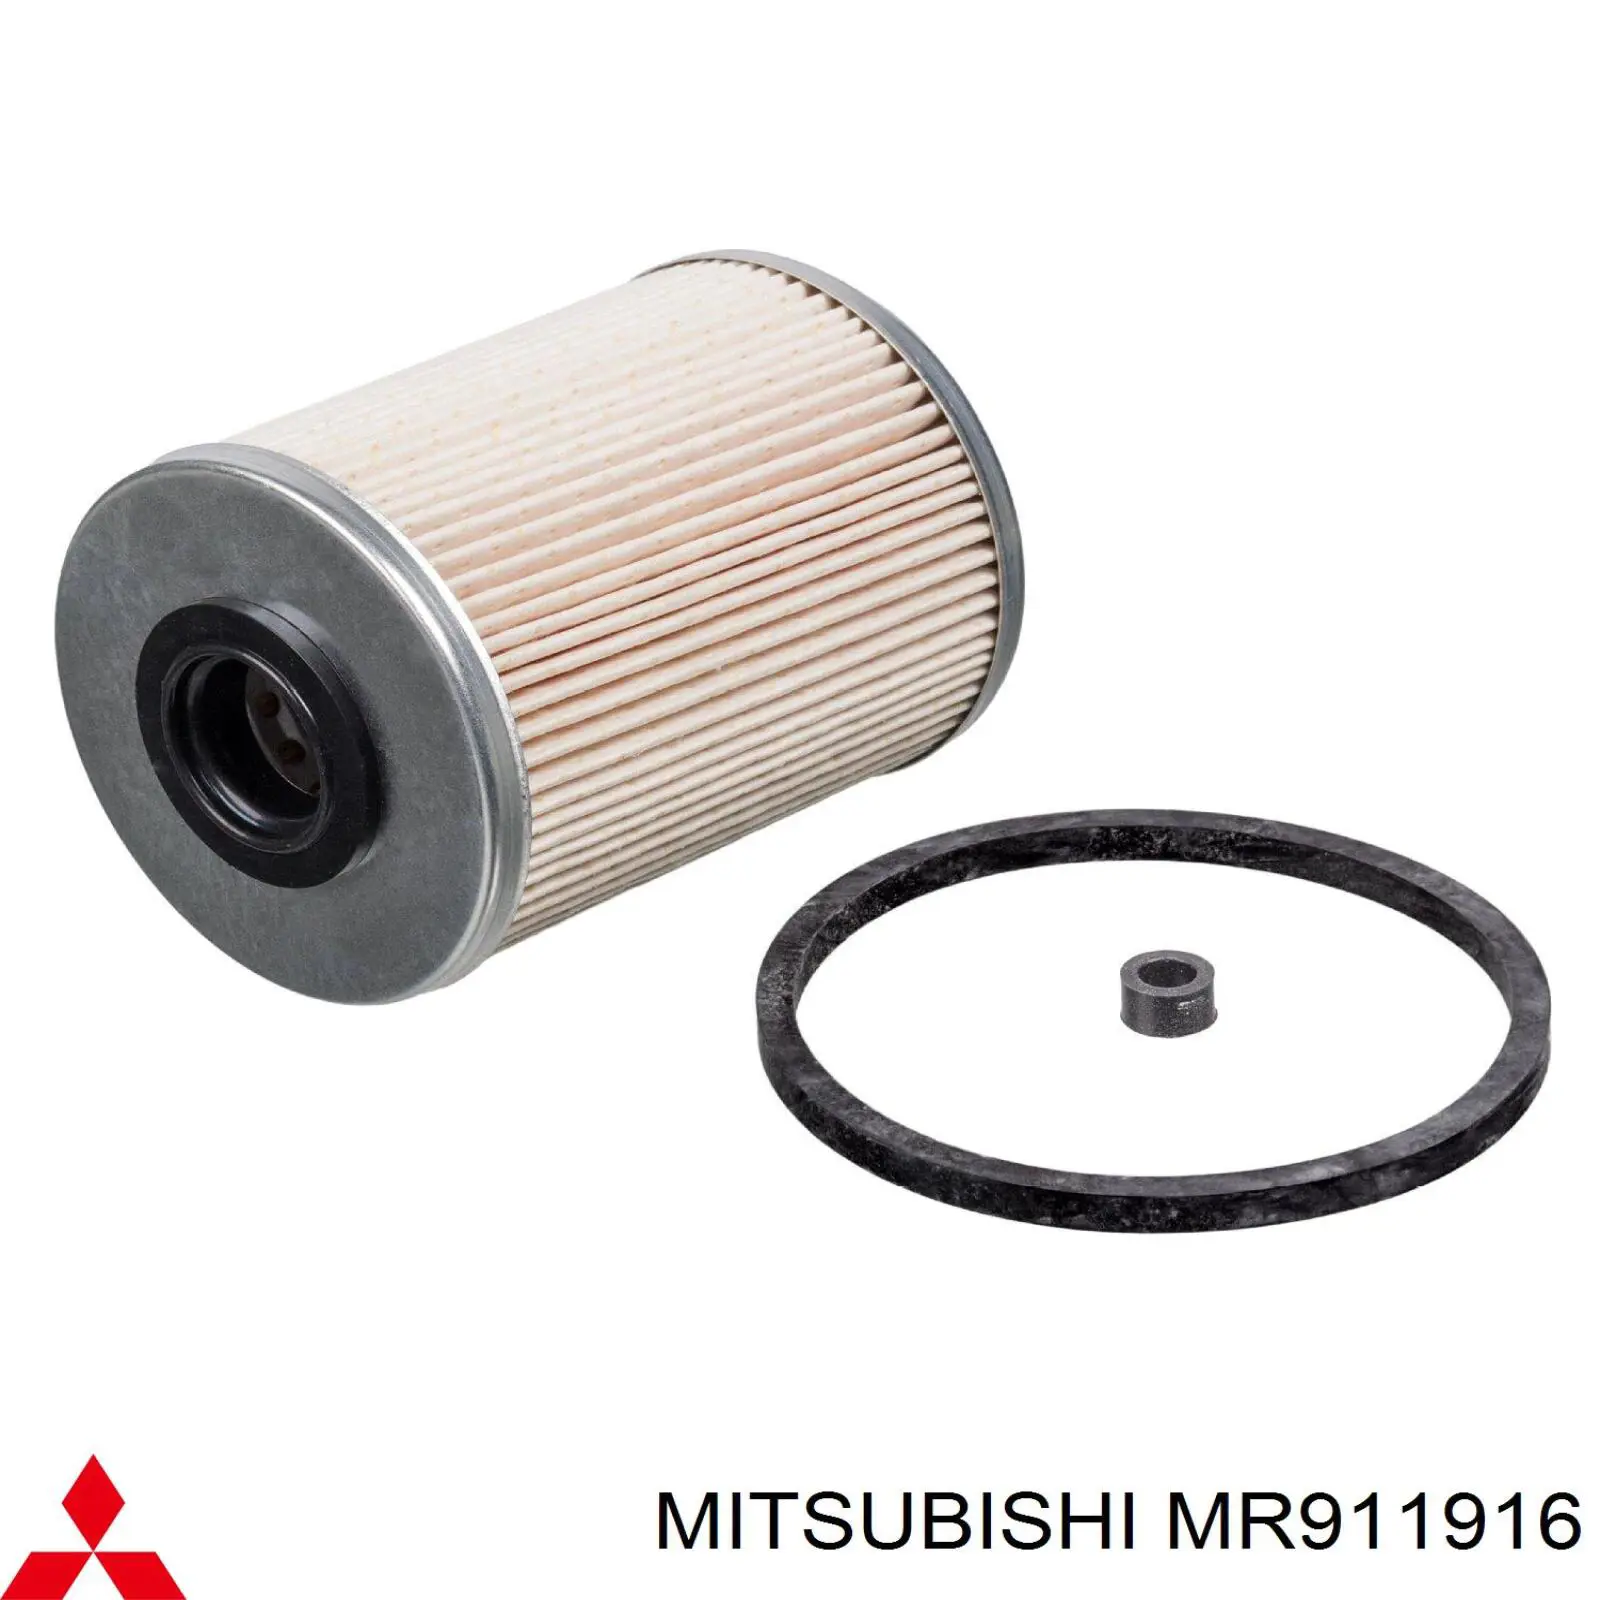 MR911916 Mitsubishi filtro combustible